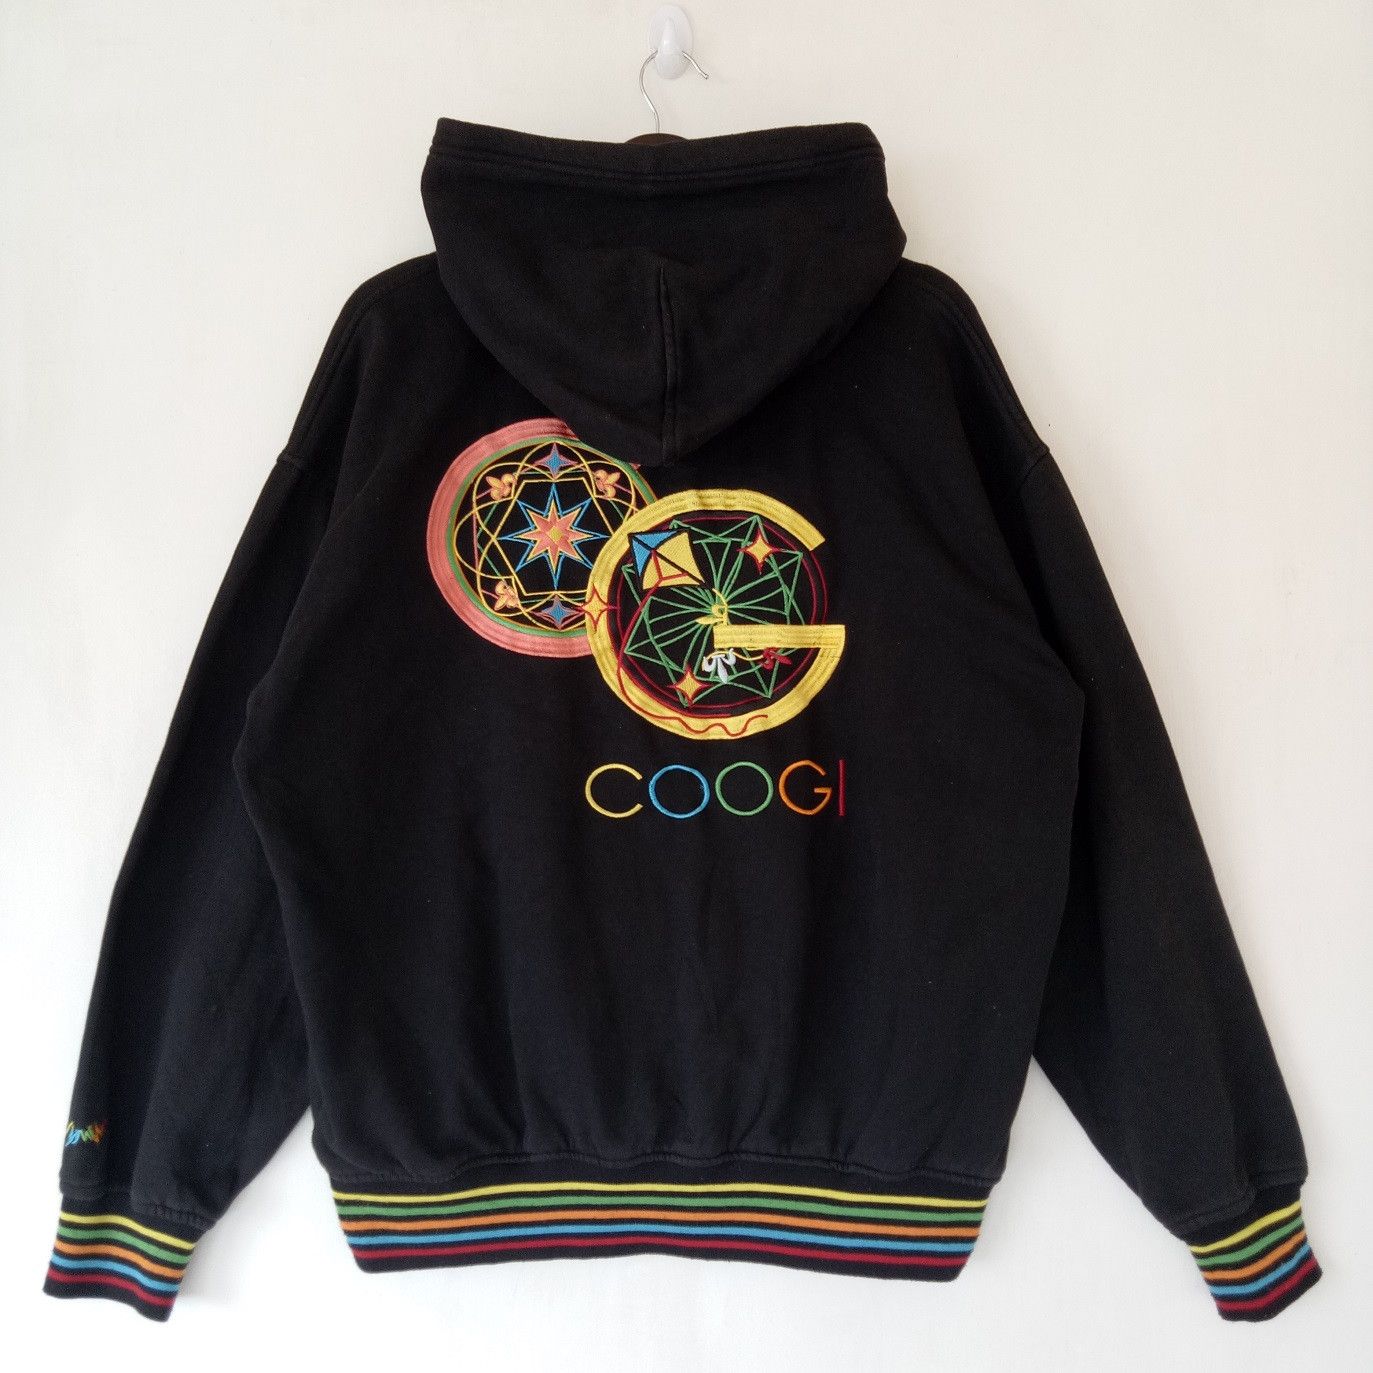 Coogi COOGI Hoodies Zipper Big Logo Embroidered Multicolor Stripes Sweater Size US XL / EU 56 / 4 - 1 Preview